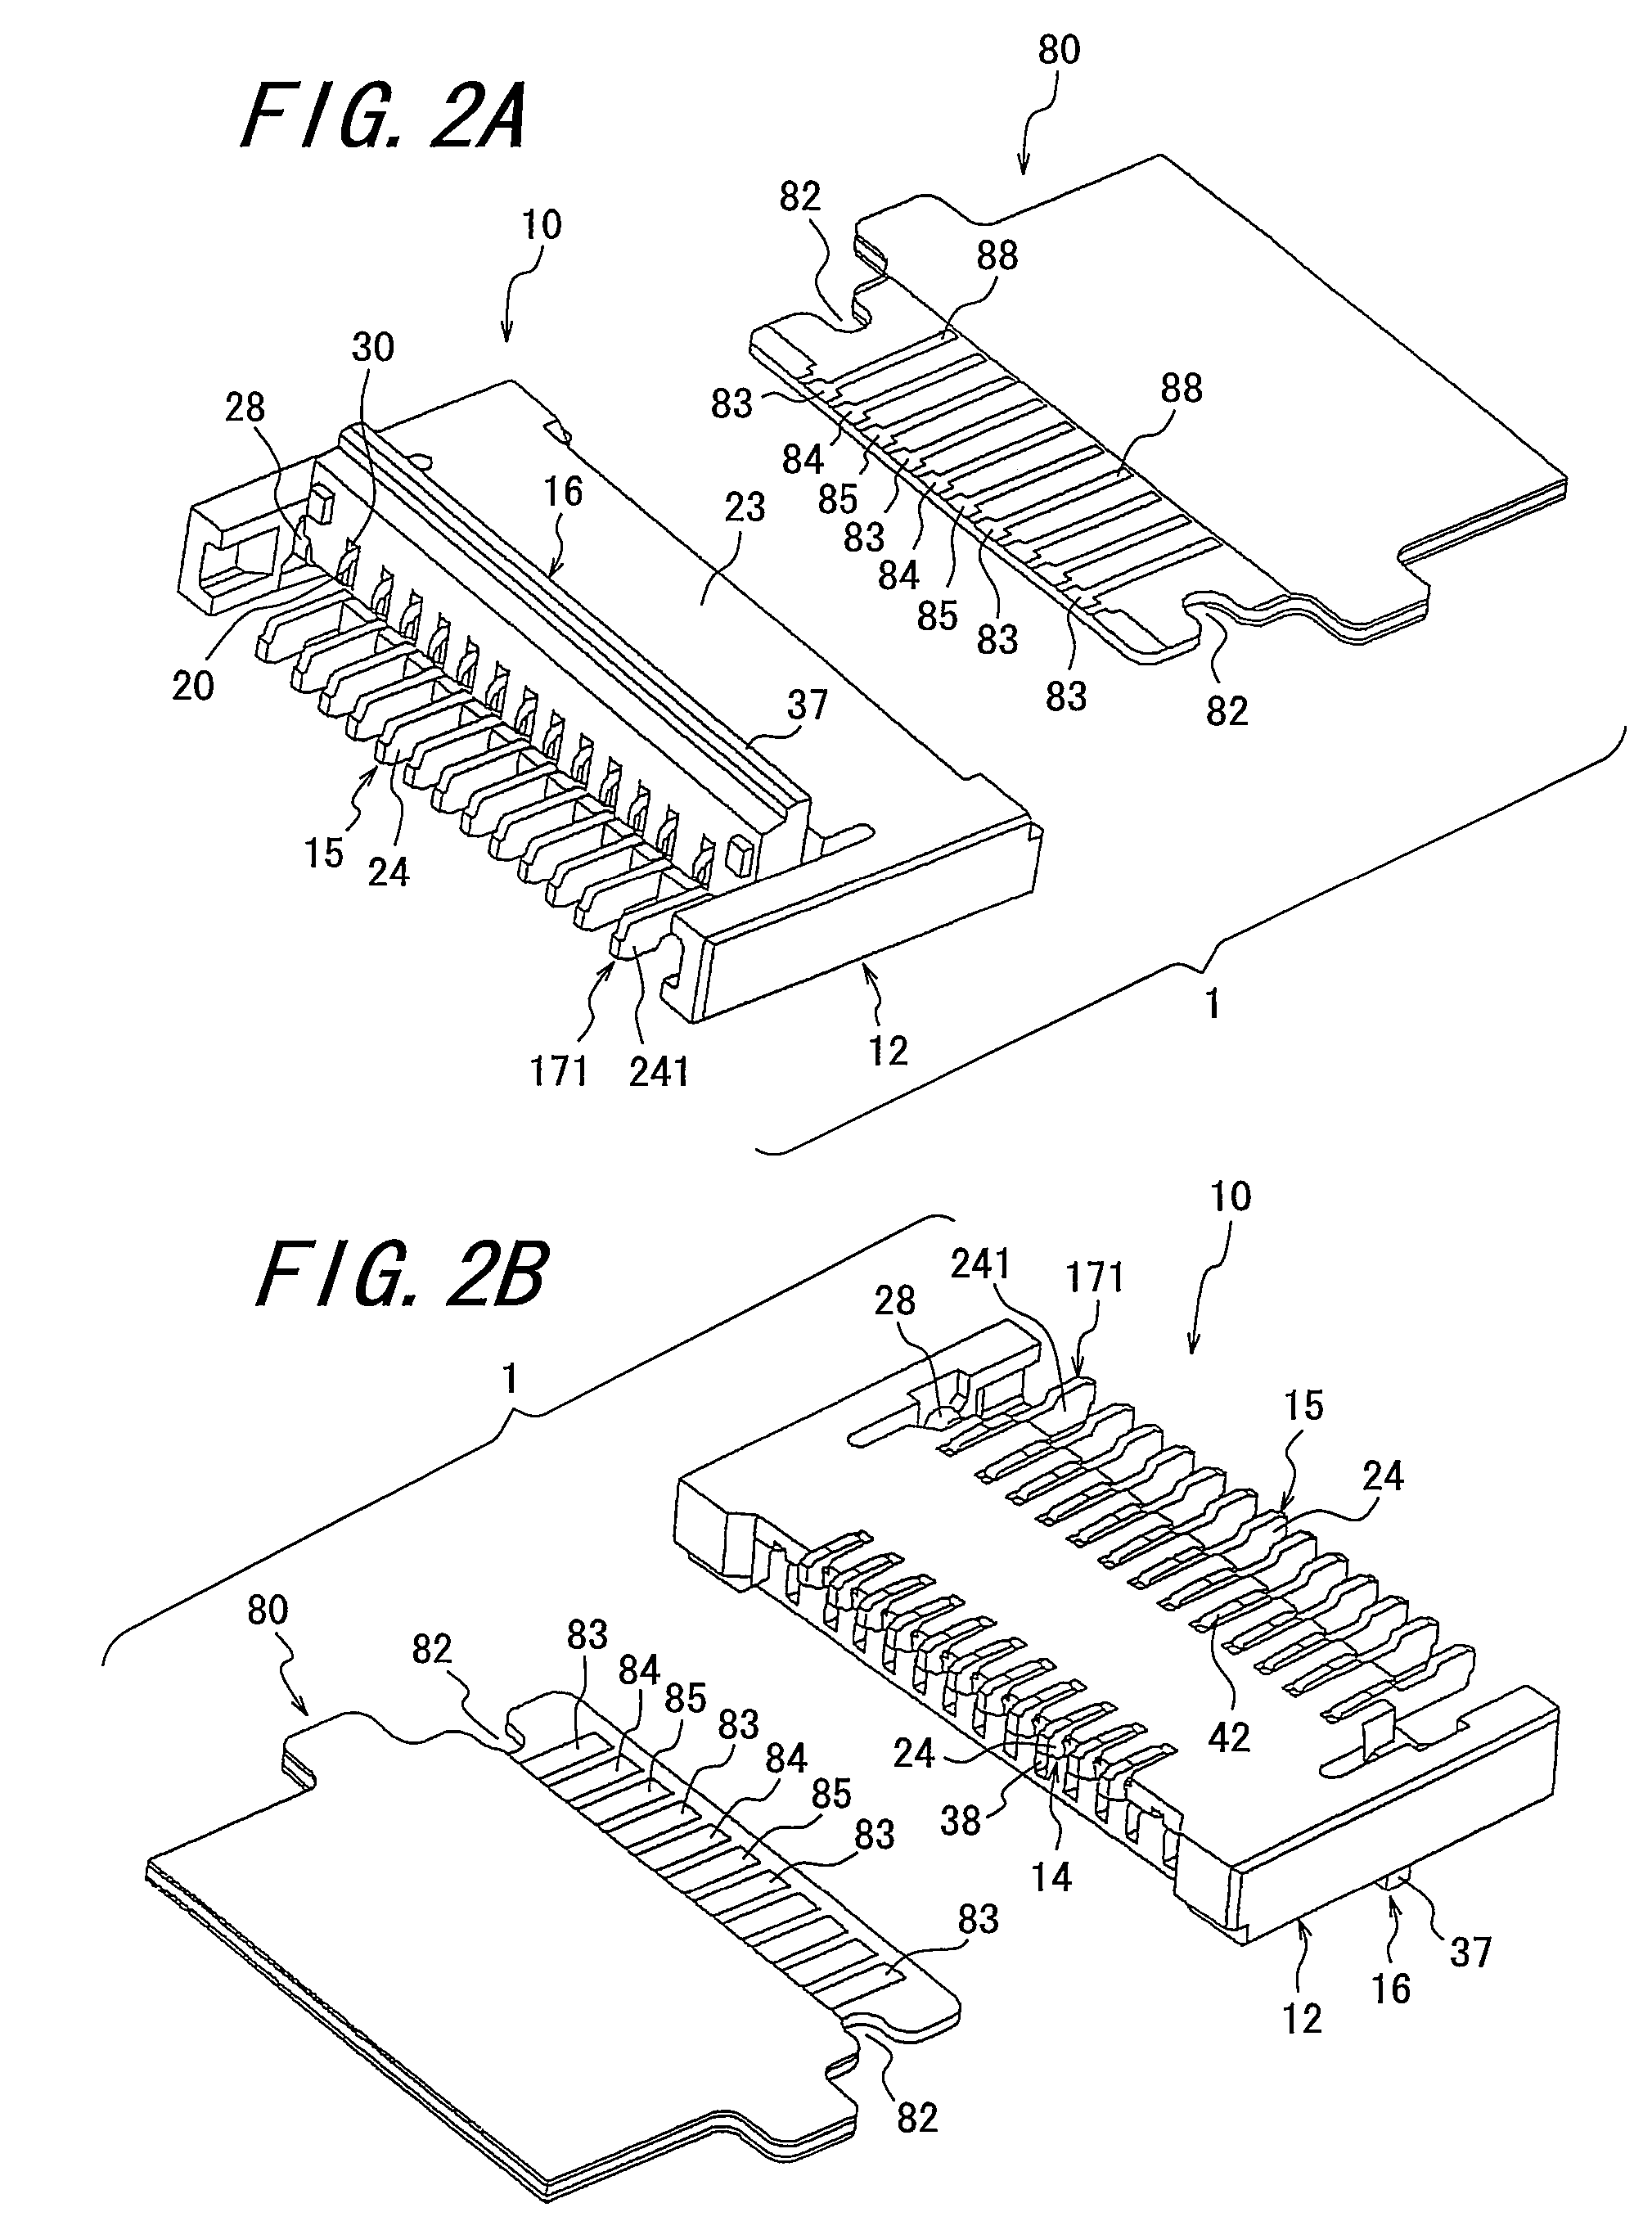 Flexible circuit board connector